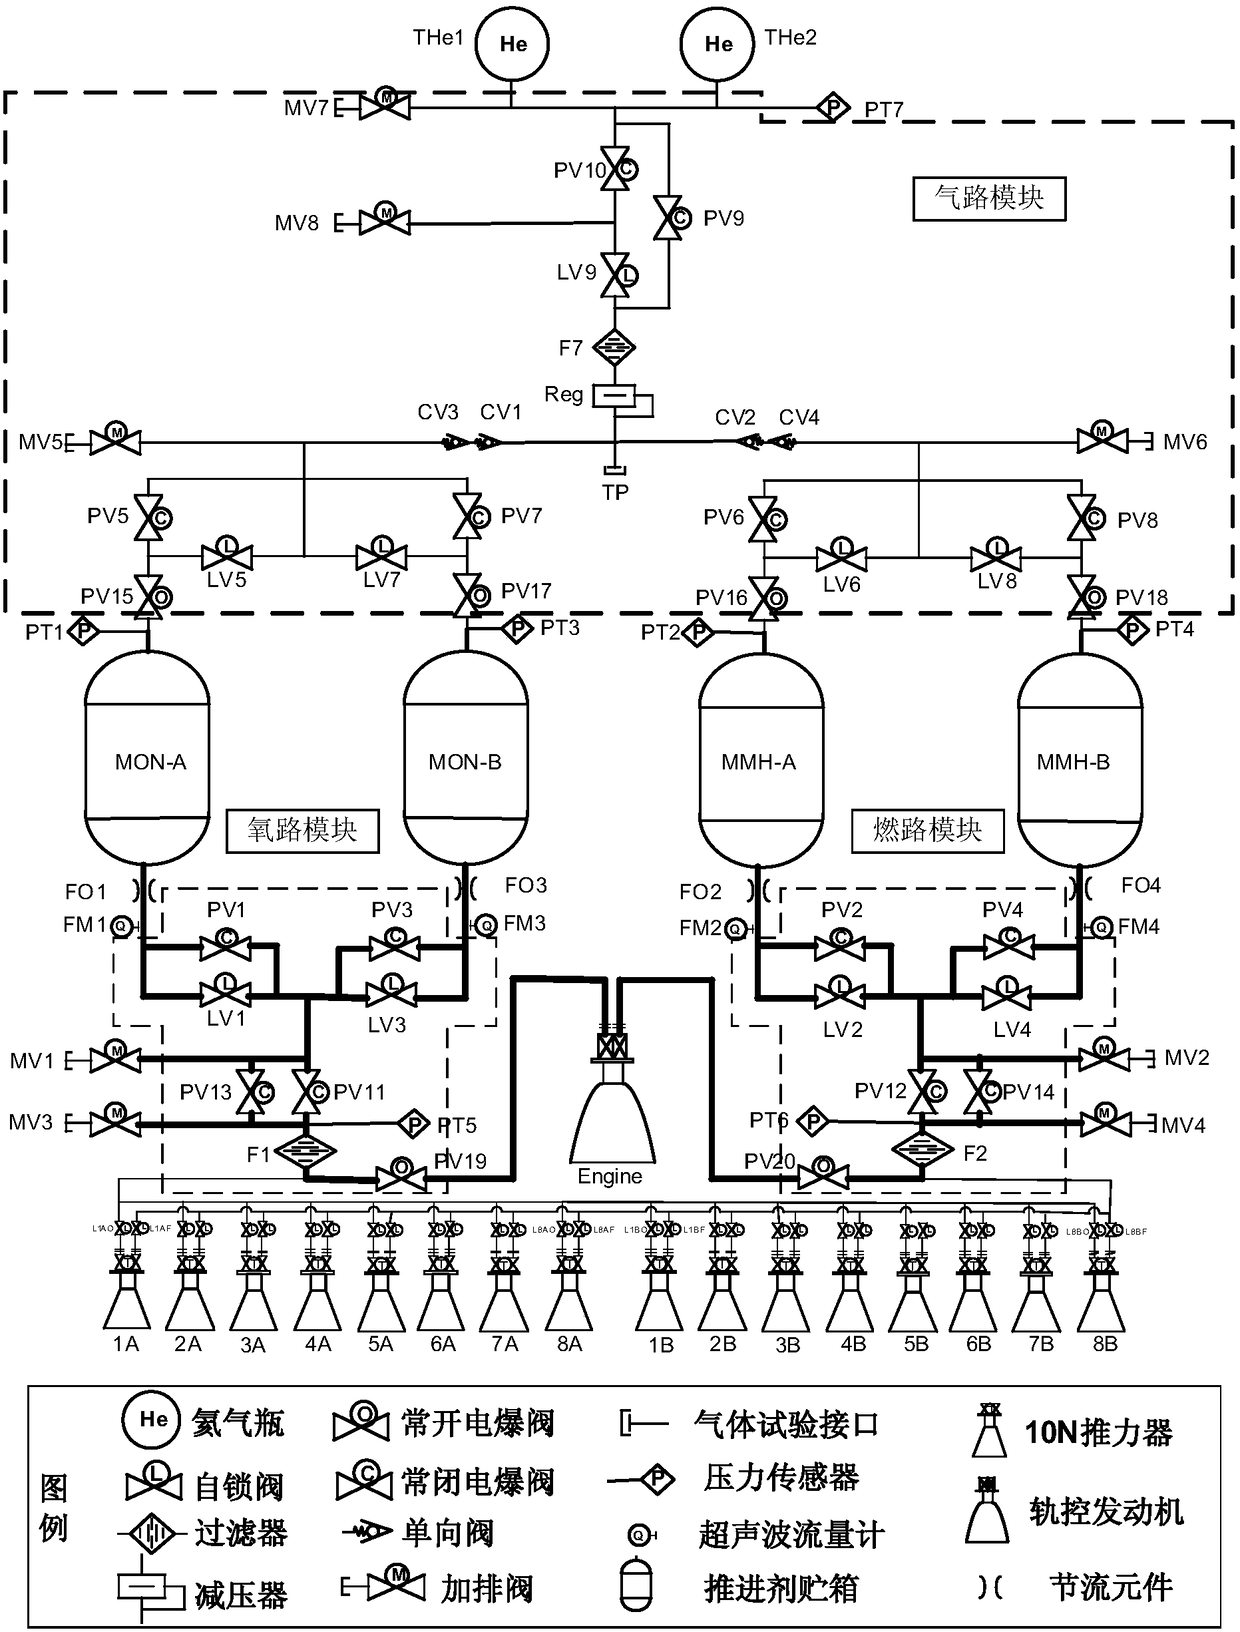 Public platform satellite chemical propulsion subsystem modular layout method